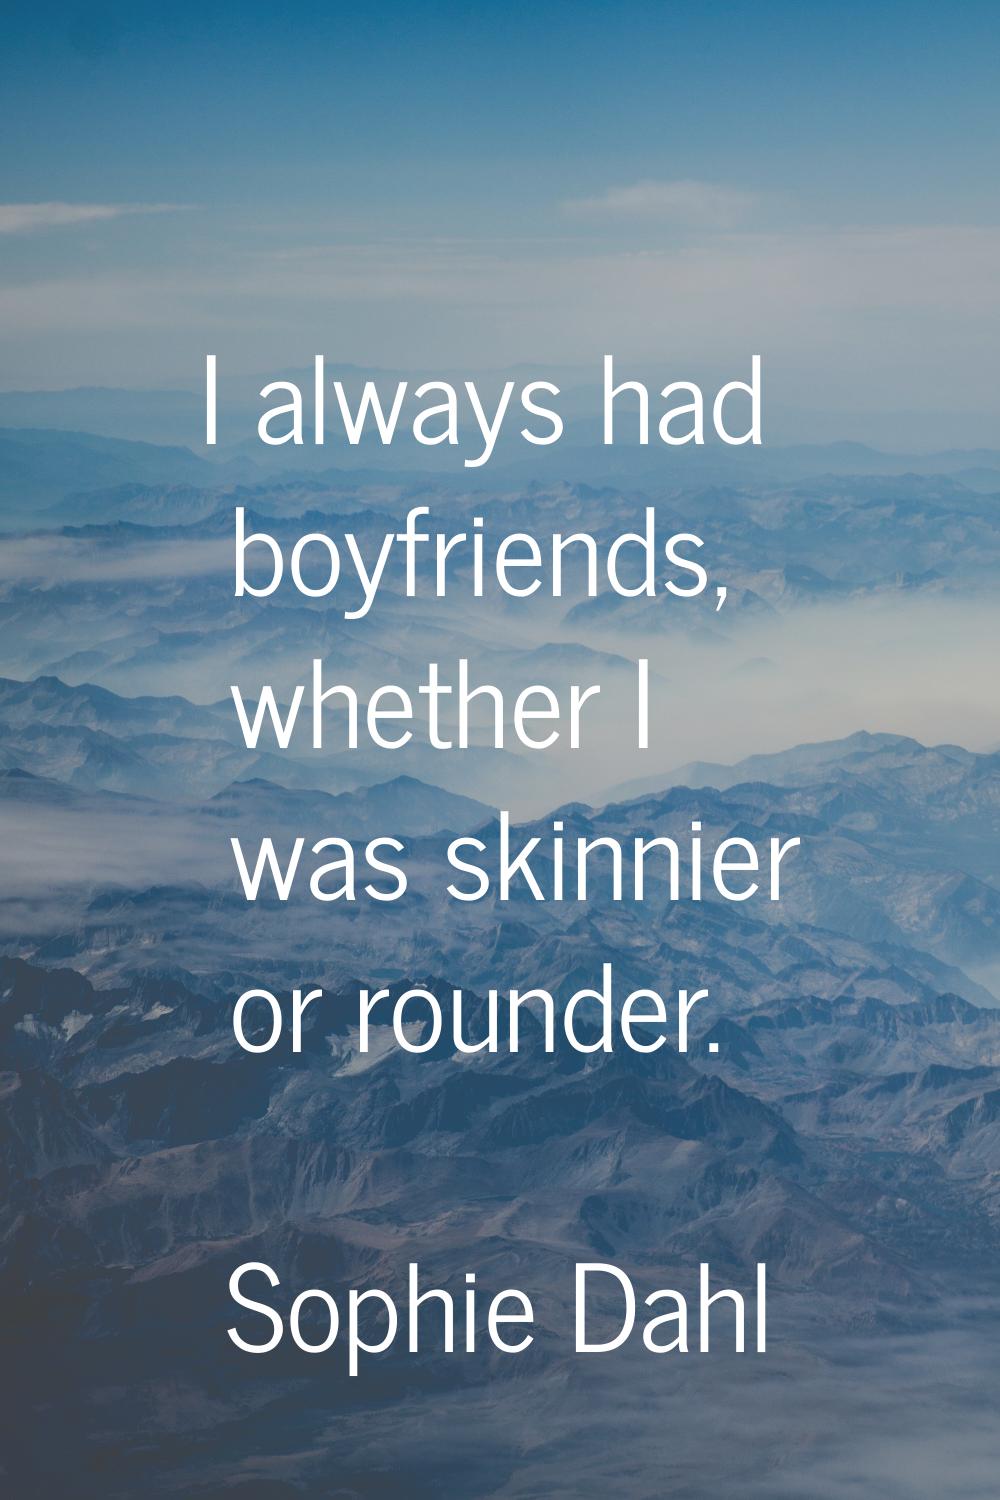 I always had boyfriends, whether I was skinnier or rounder.